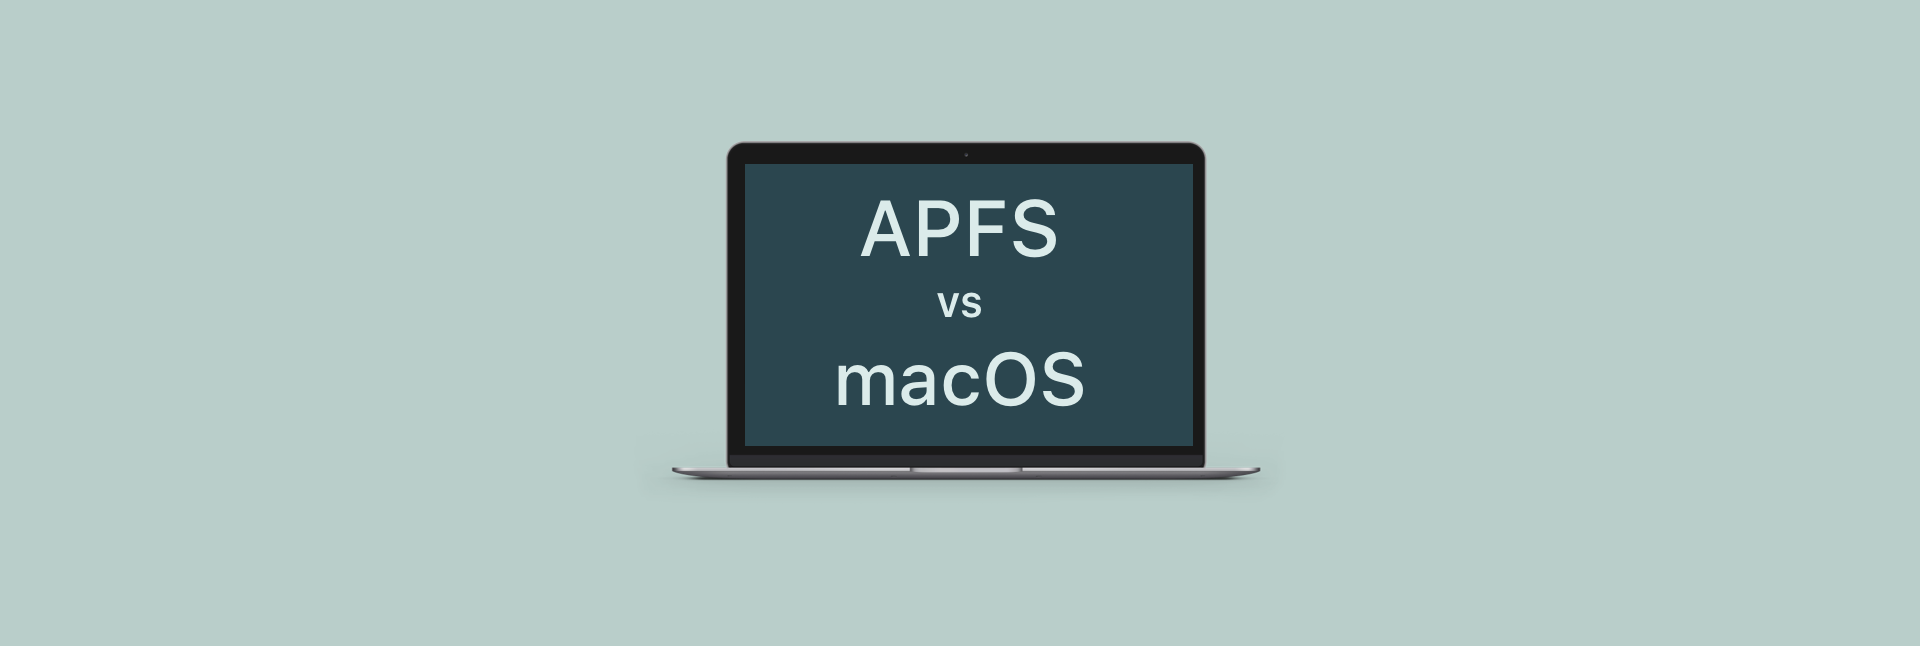 apfs vs mac os extended